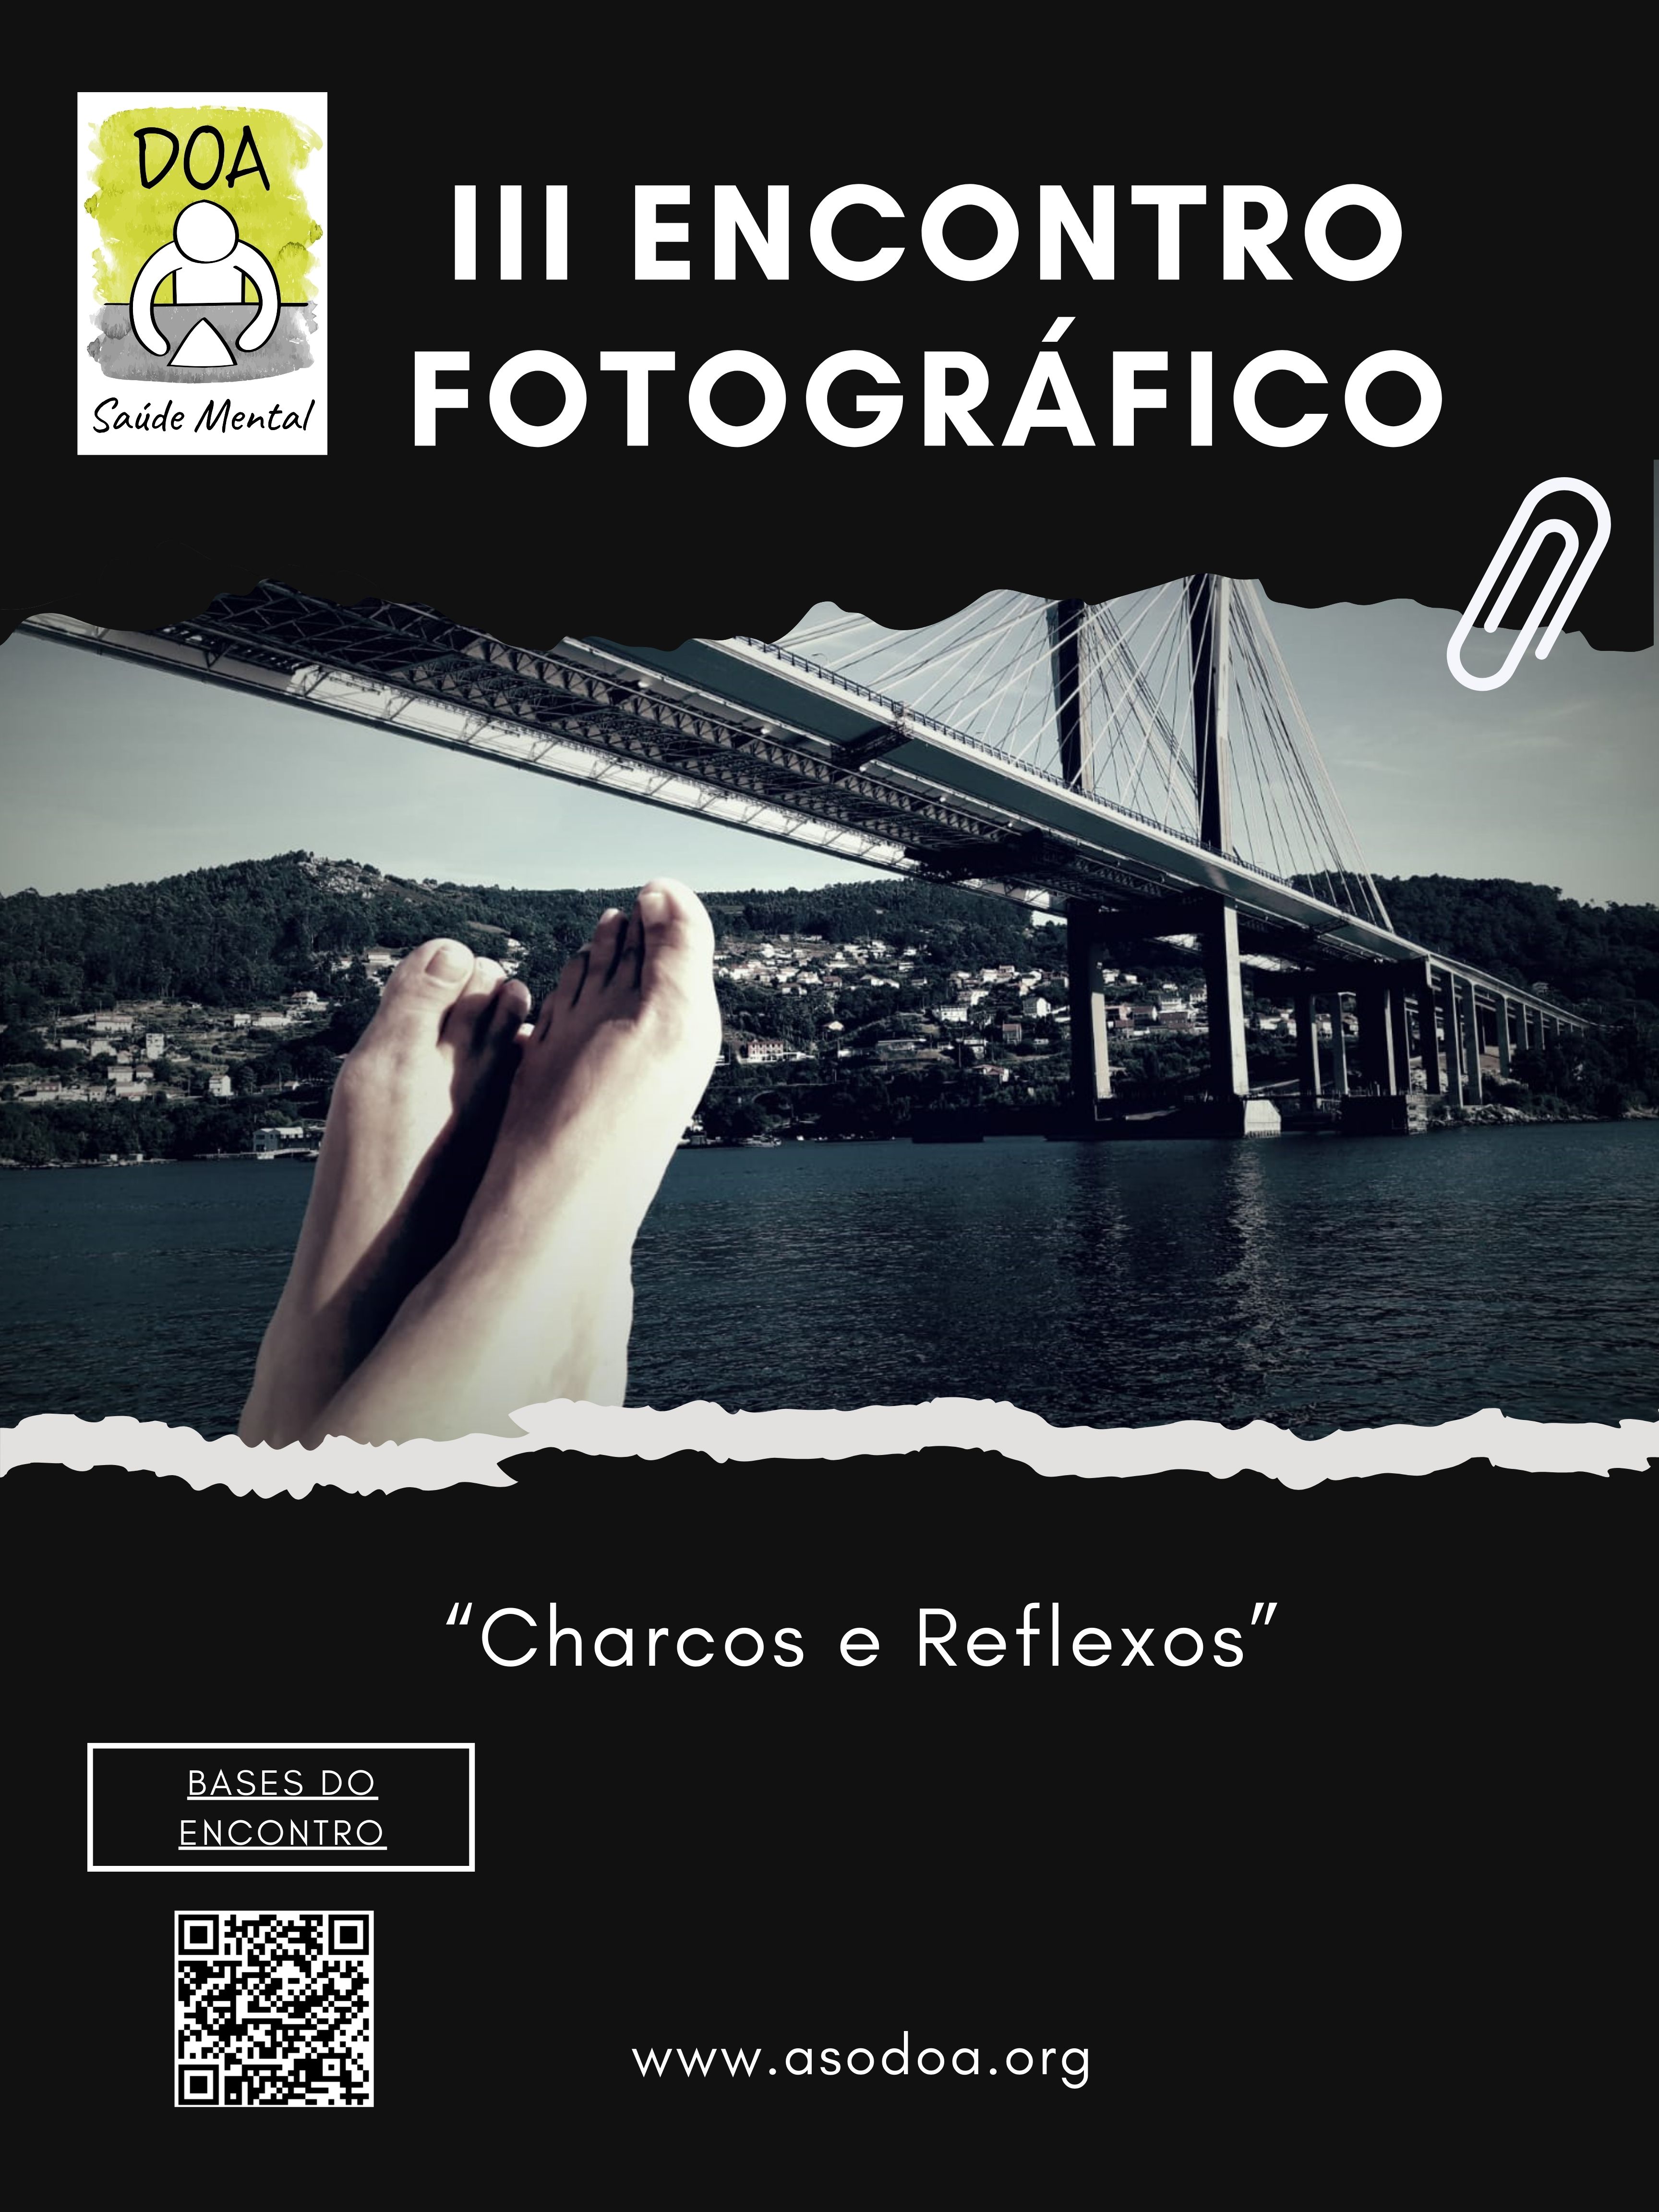 CHARCOS E REFLEXOS III Encuentro fotográfico DOA